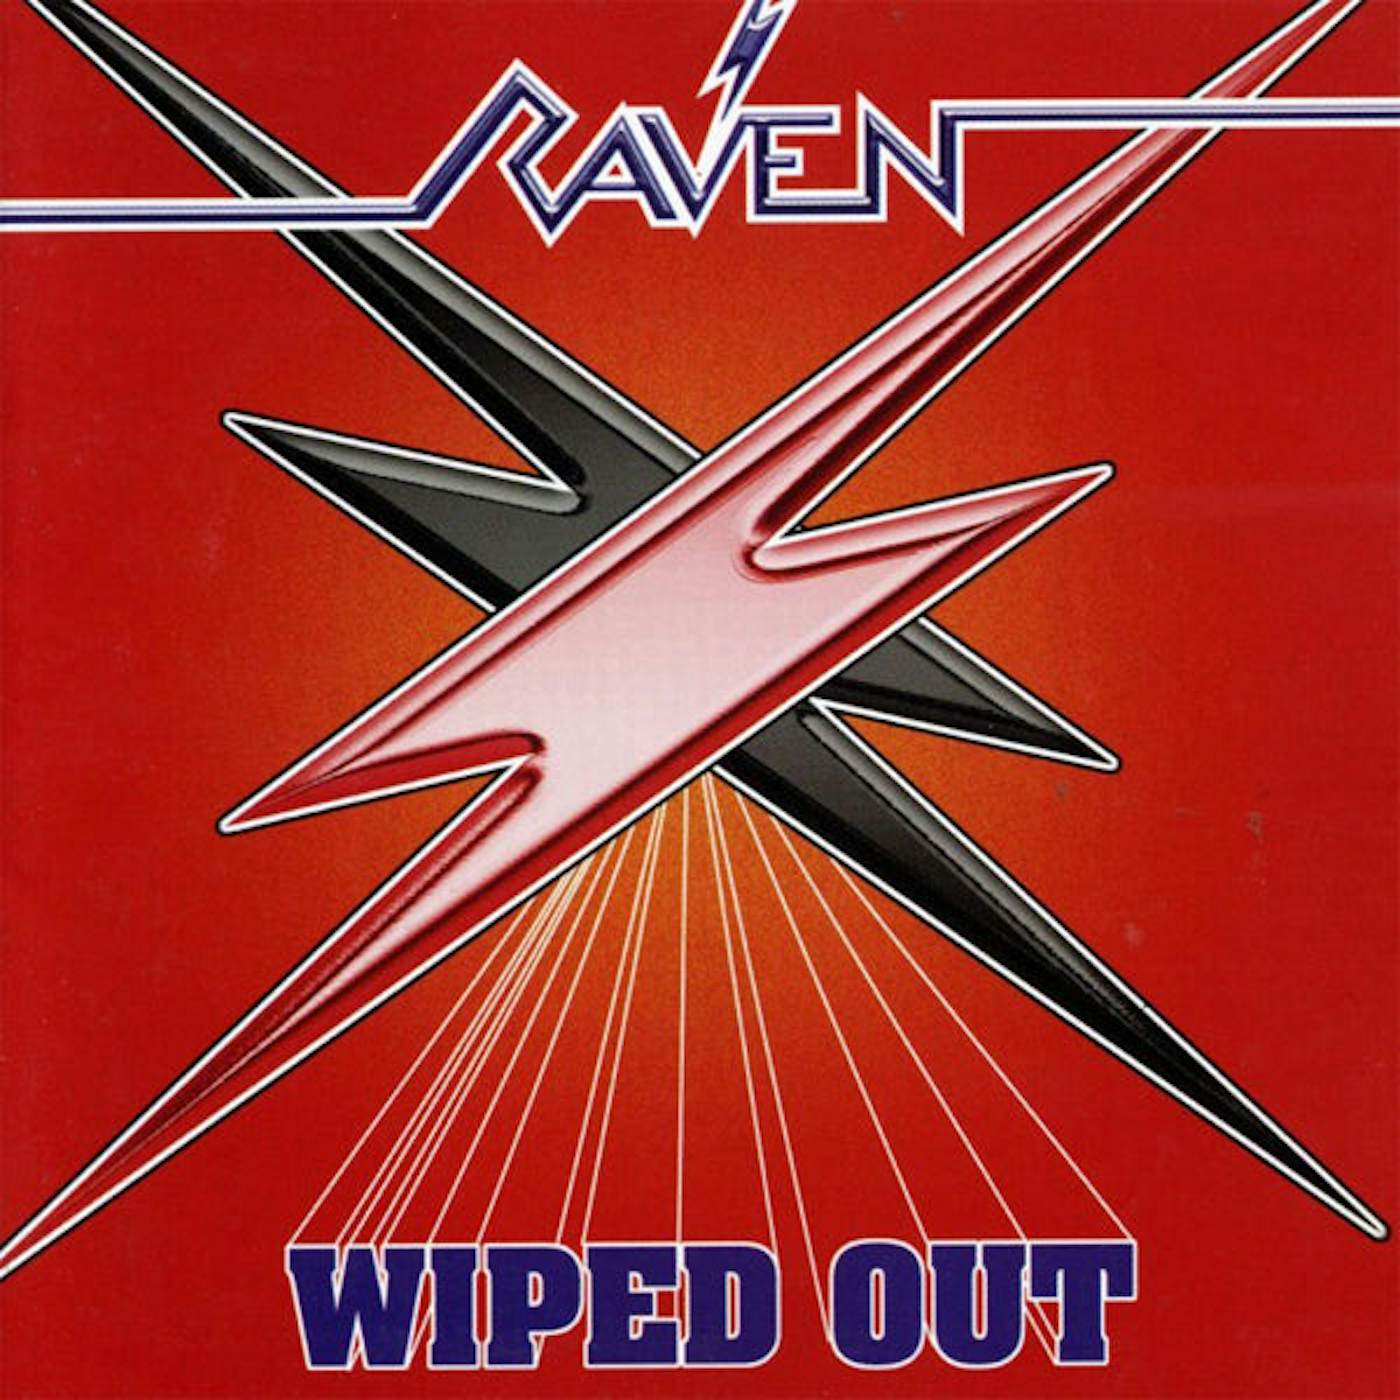 Raven LP - Wiped Out (+7'') (Vinyl)